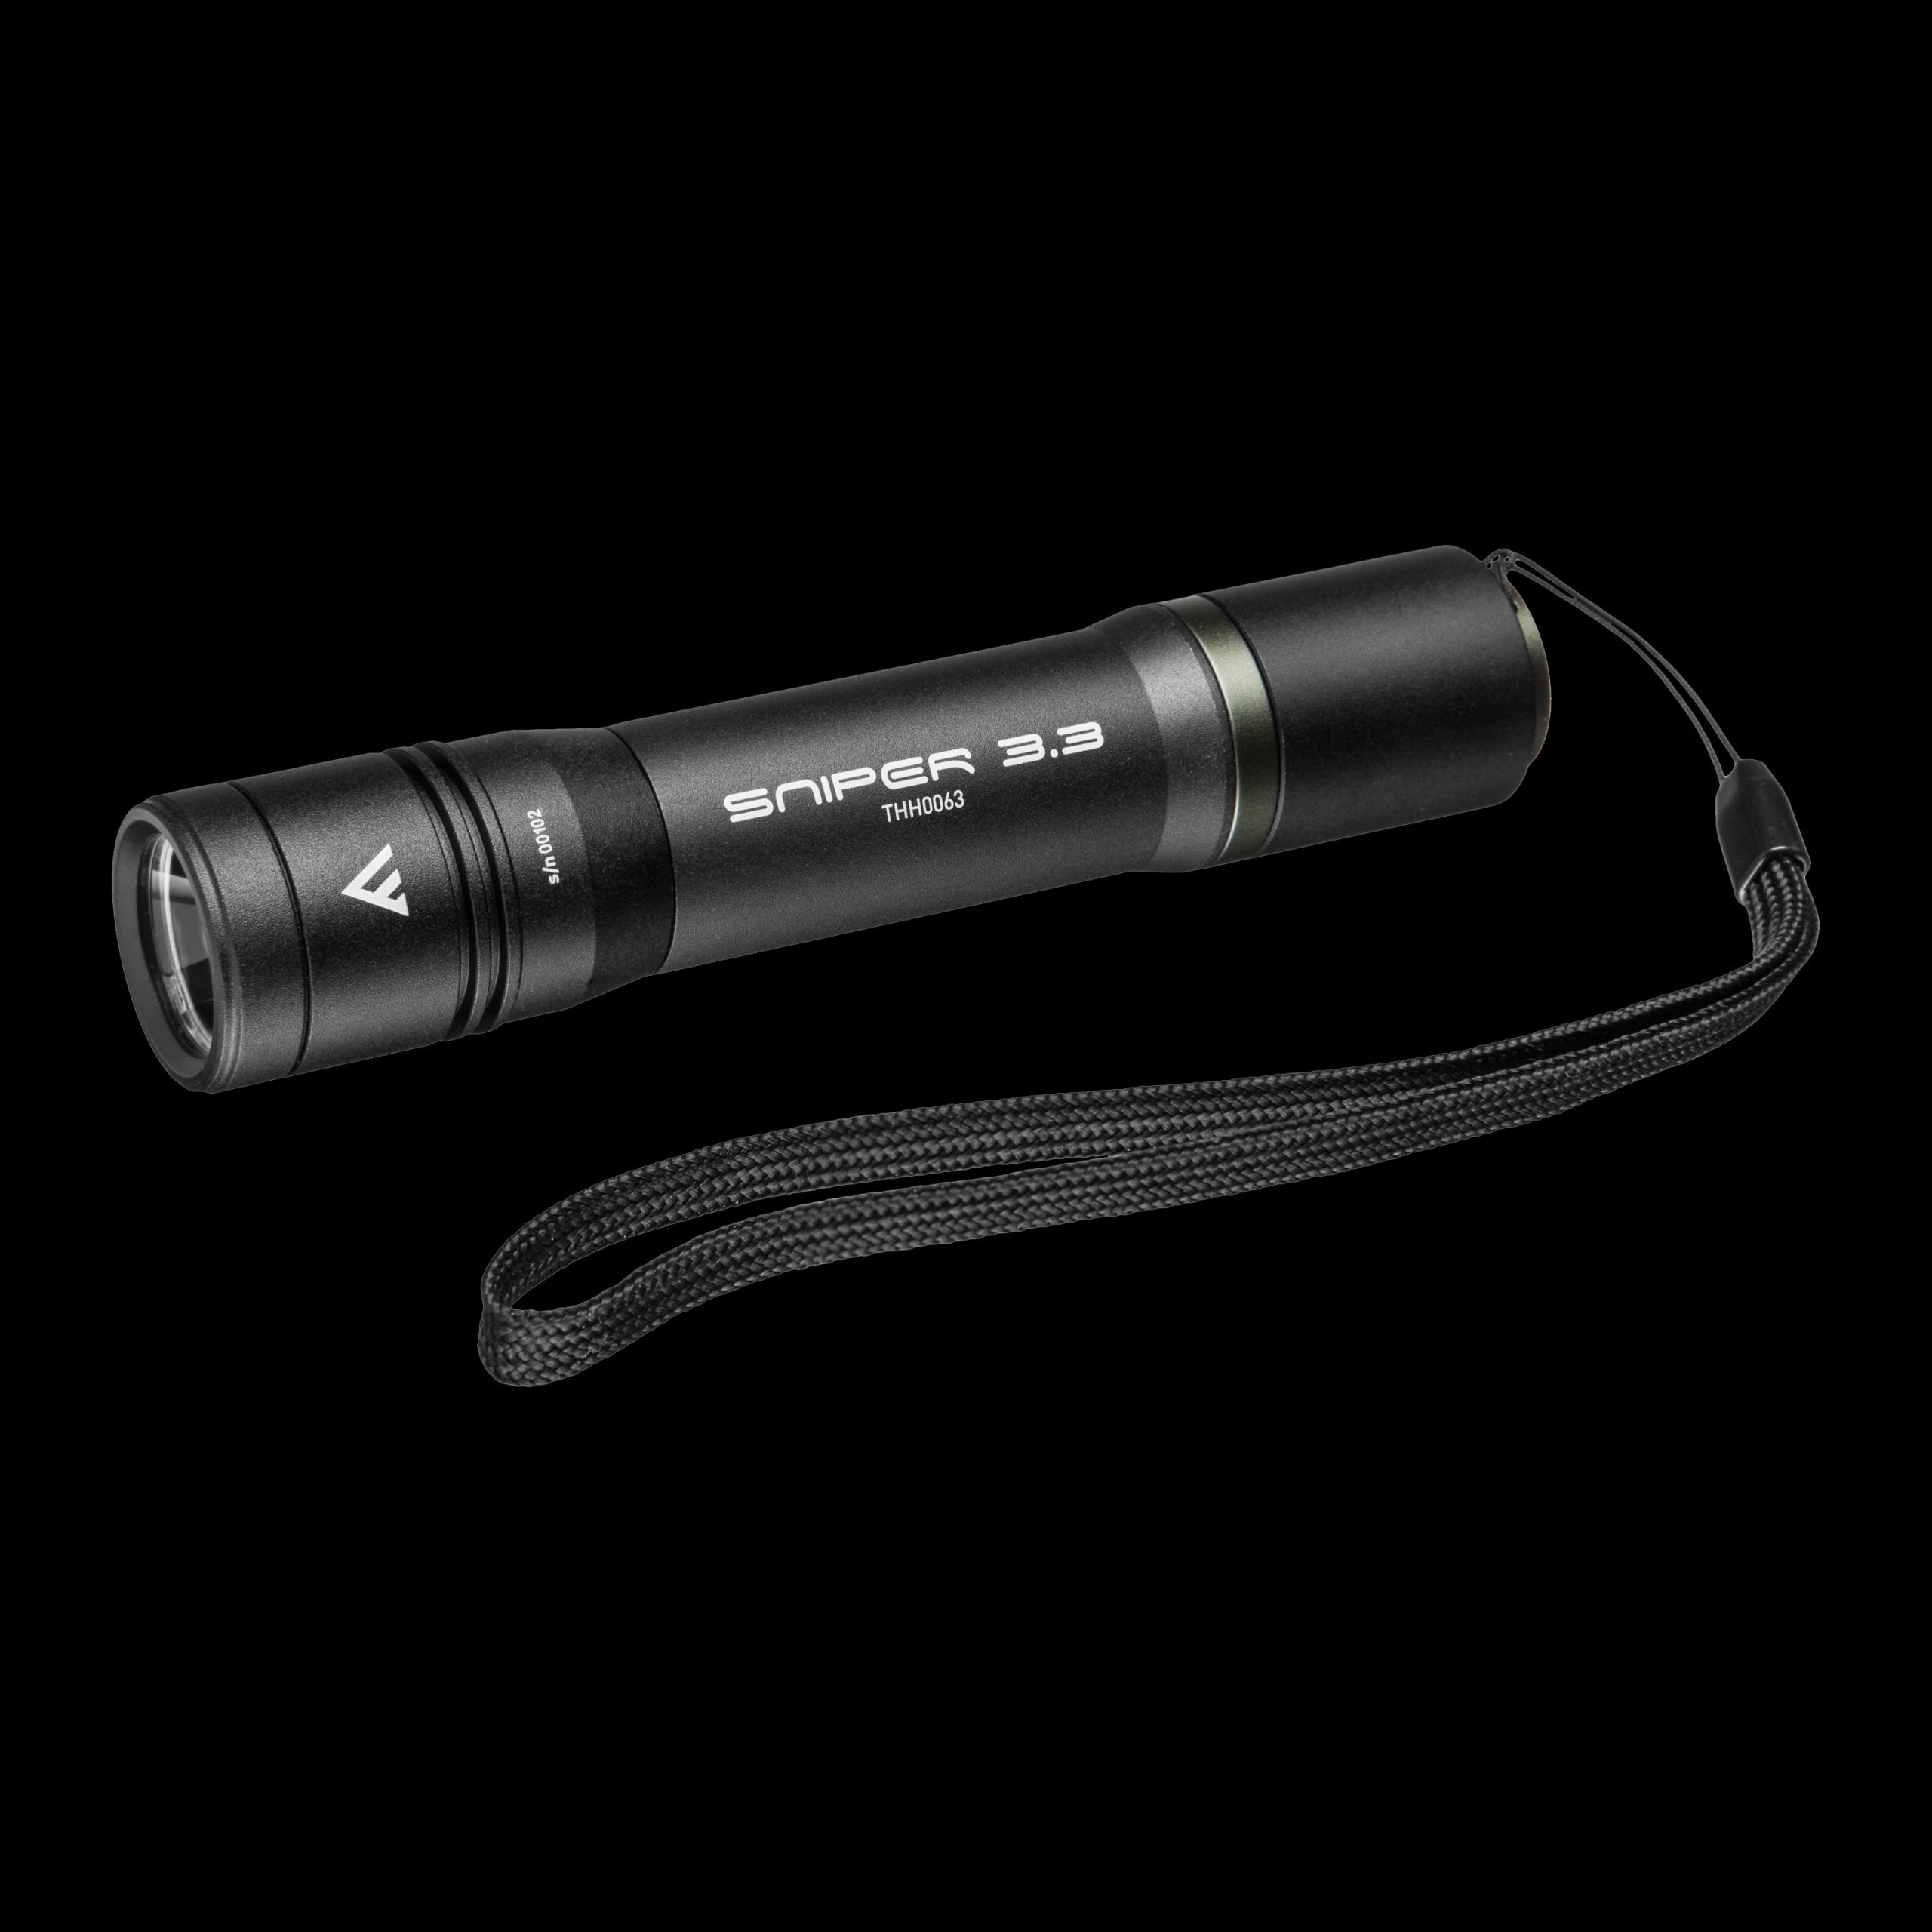 Handheld flashlight with focus, 1020 lm, SNIPER 3.3